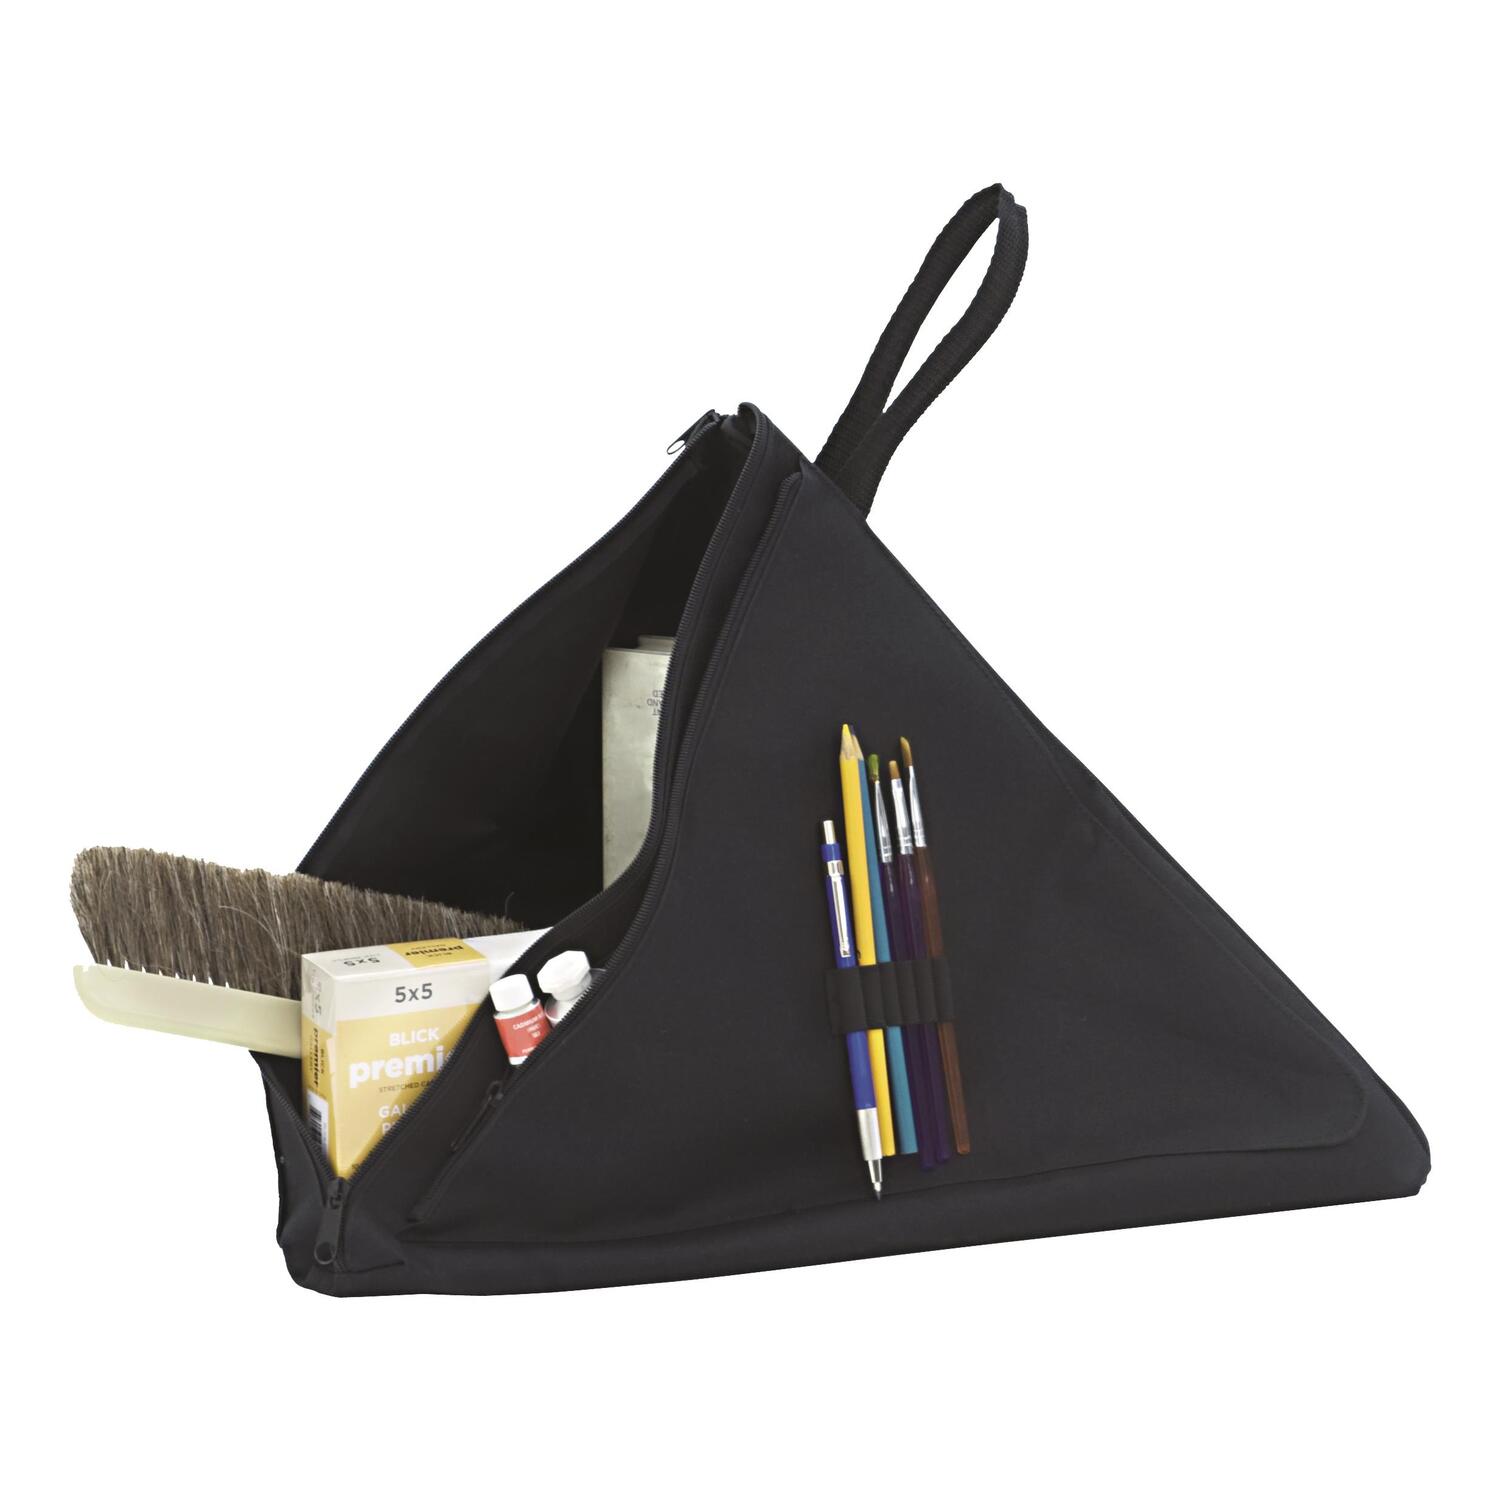 Studio Designs Pyramid Art Supplies Organization, Hanging Storage Bag with Zipper, Black (16" W)- 18698 - image 3 of 4